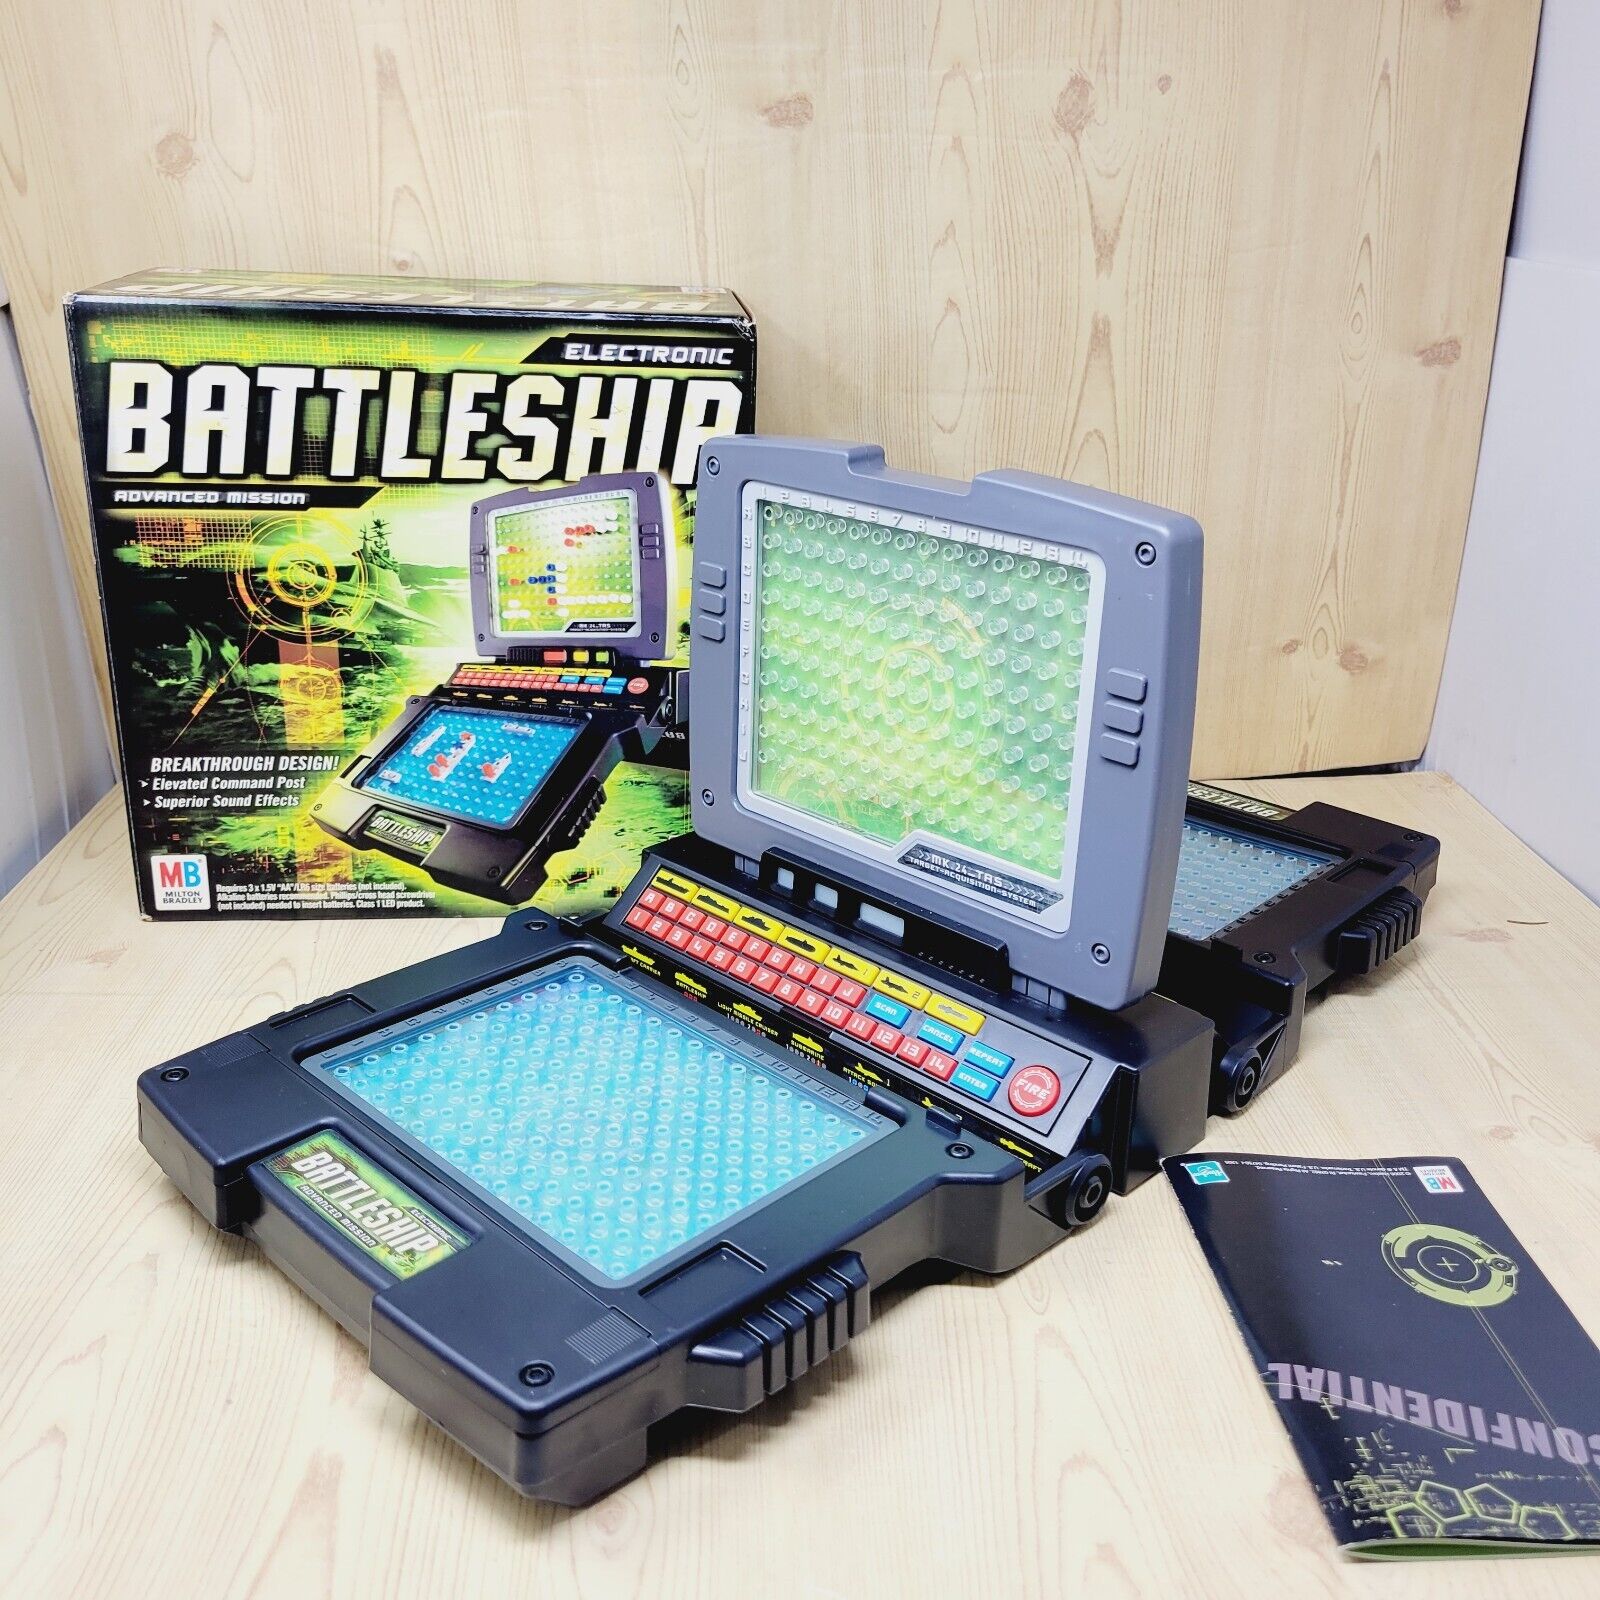 2005 Electronic Battleship Advanced Mission Game Milton Bradley Tested & Working